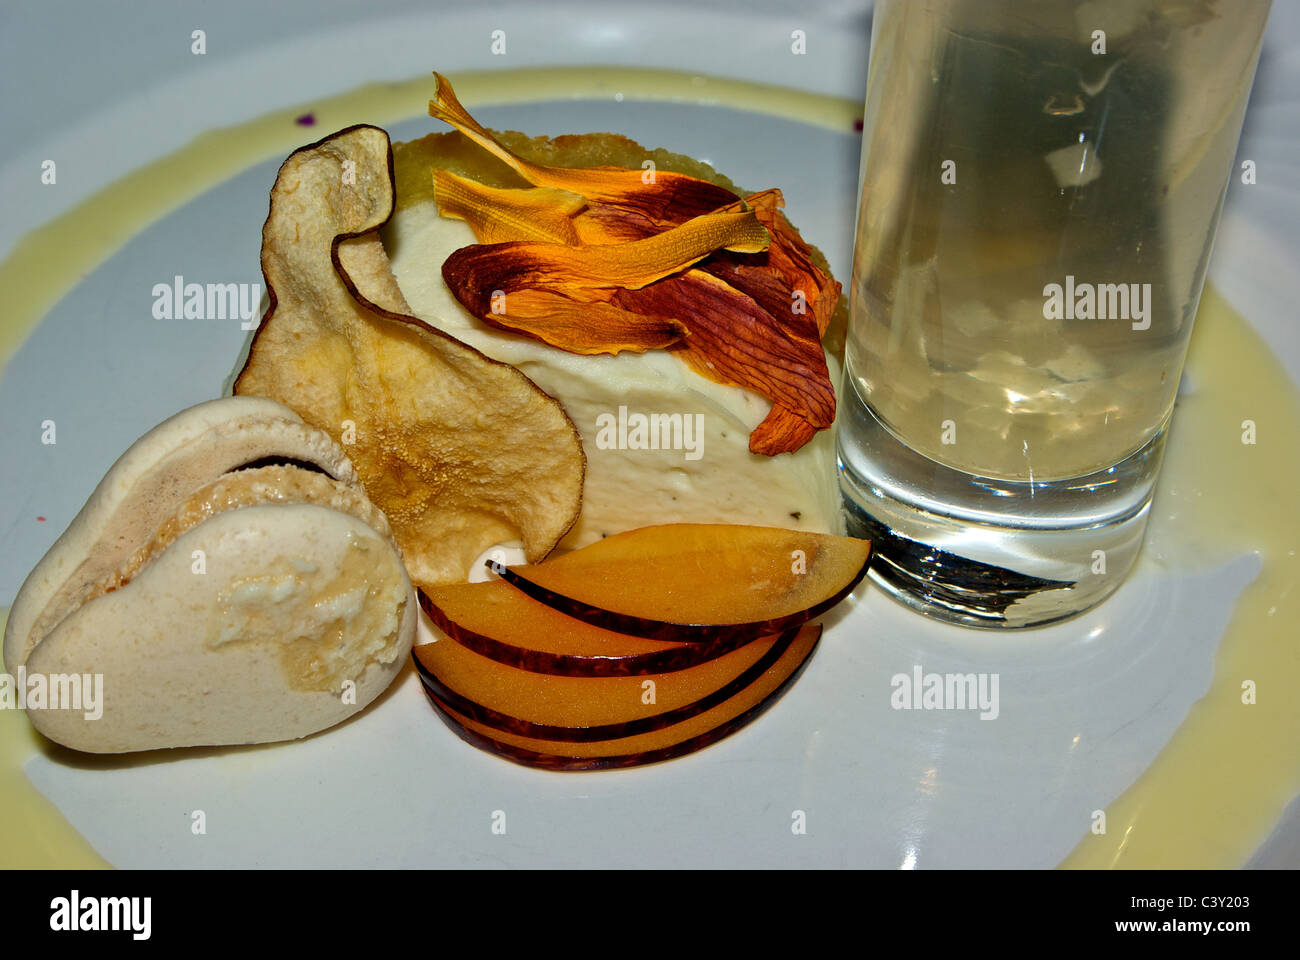 Pear based dessert plate: drink cookie Bavarian cream dried fruit nectarine slices edible flowers garnish Stock Photo